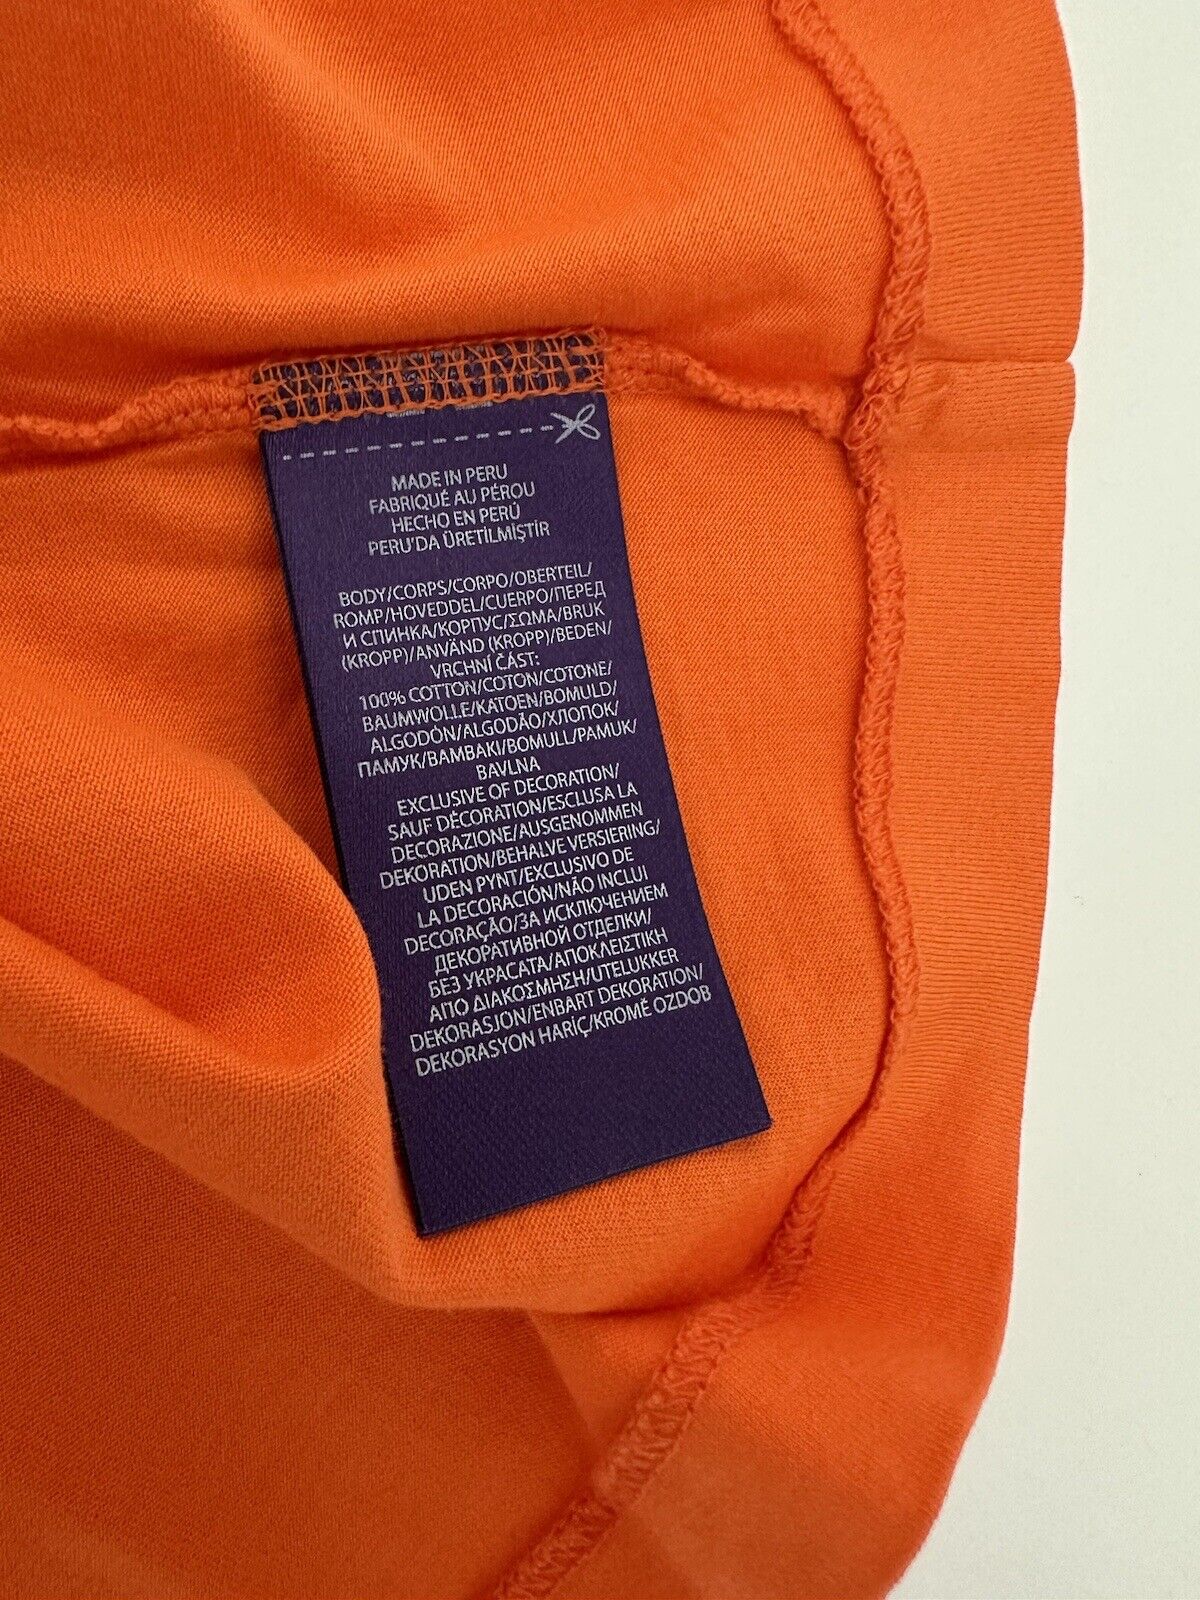 Ralph Lauren Purple Label Orange Cotton Jersey T-Shirt XL NWT $195